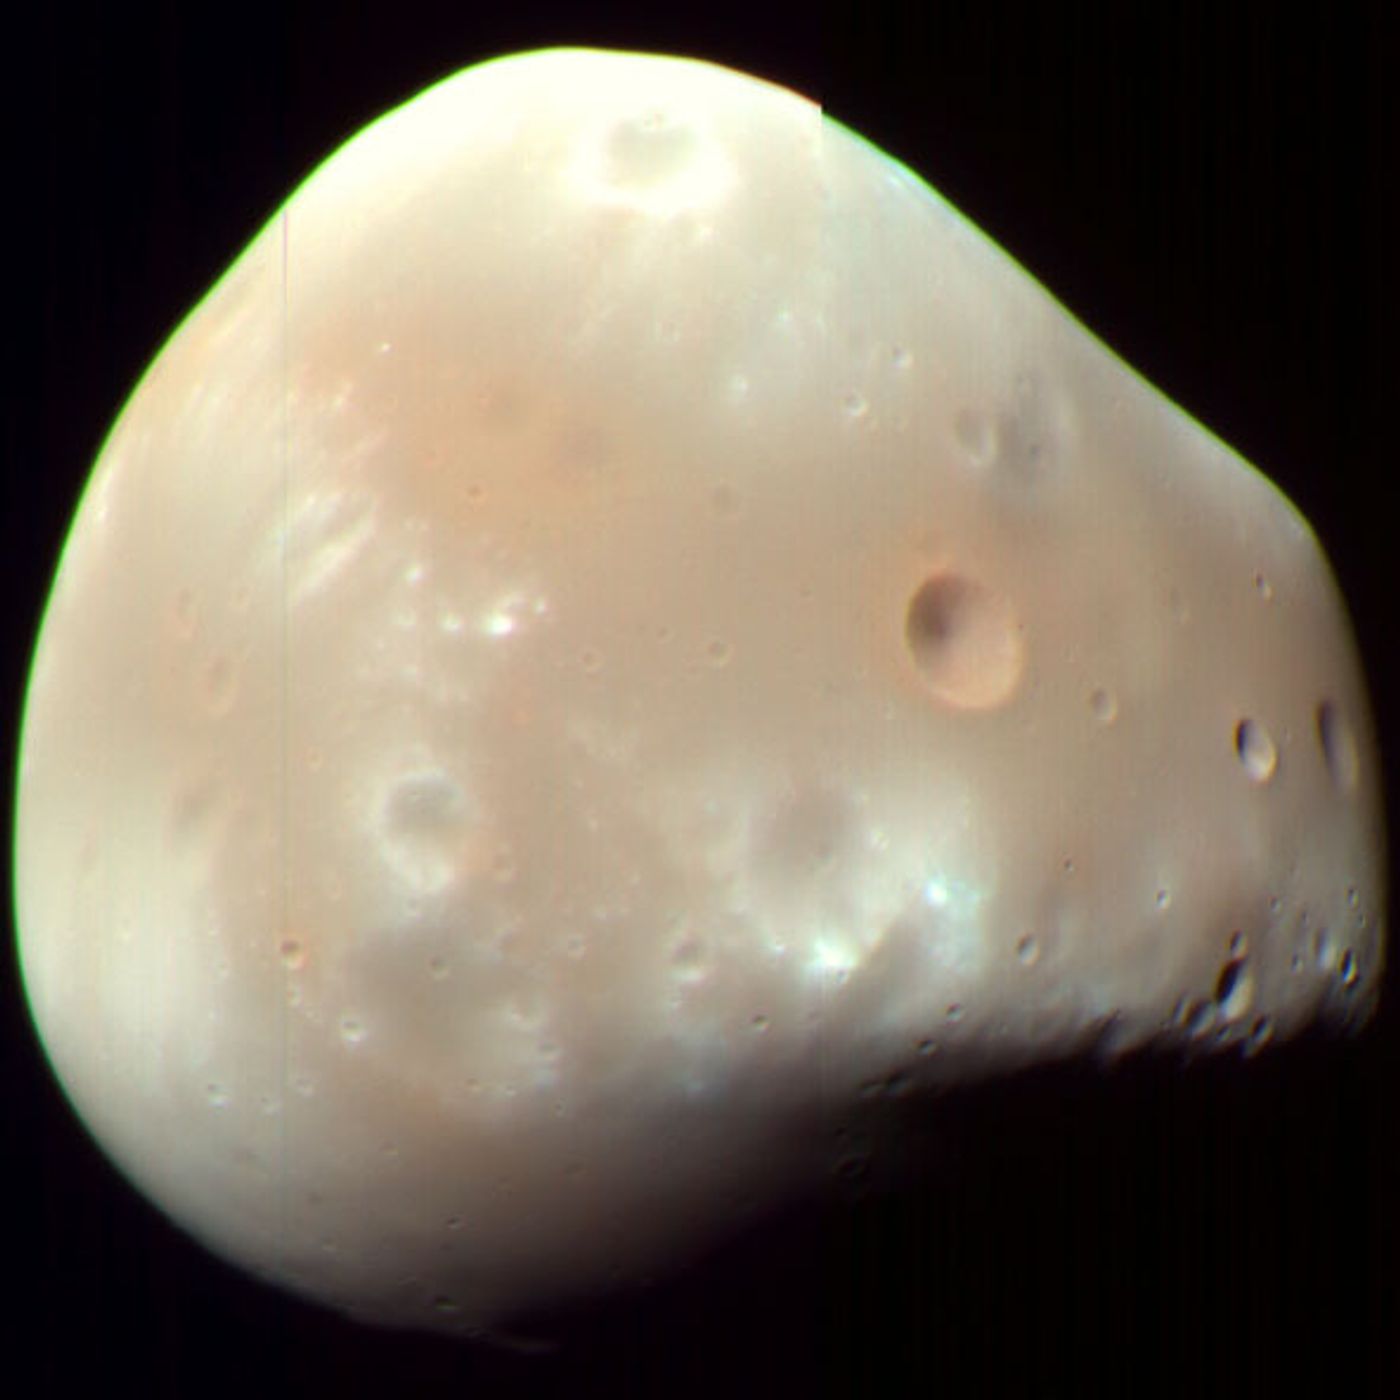 Deimos (color-enhanced) (Credit: NASA/JPL-Caltech/University of Arizona)